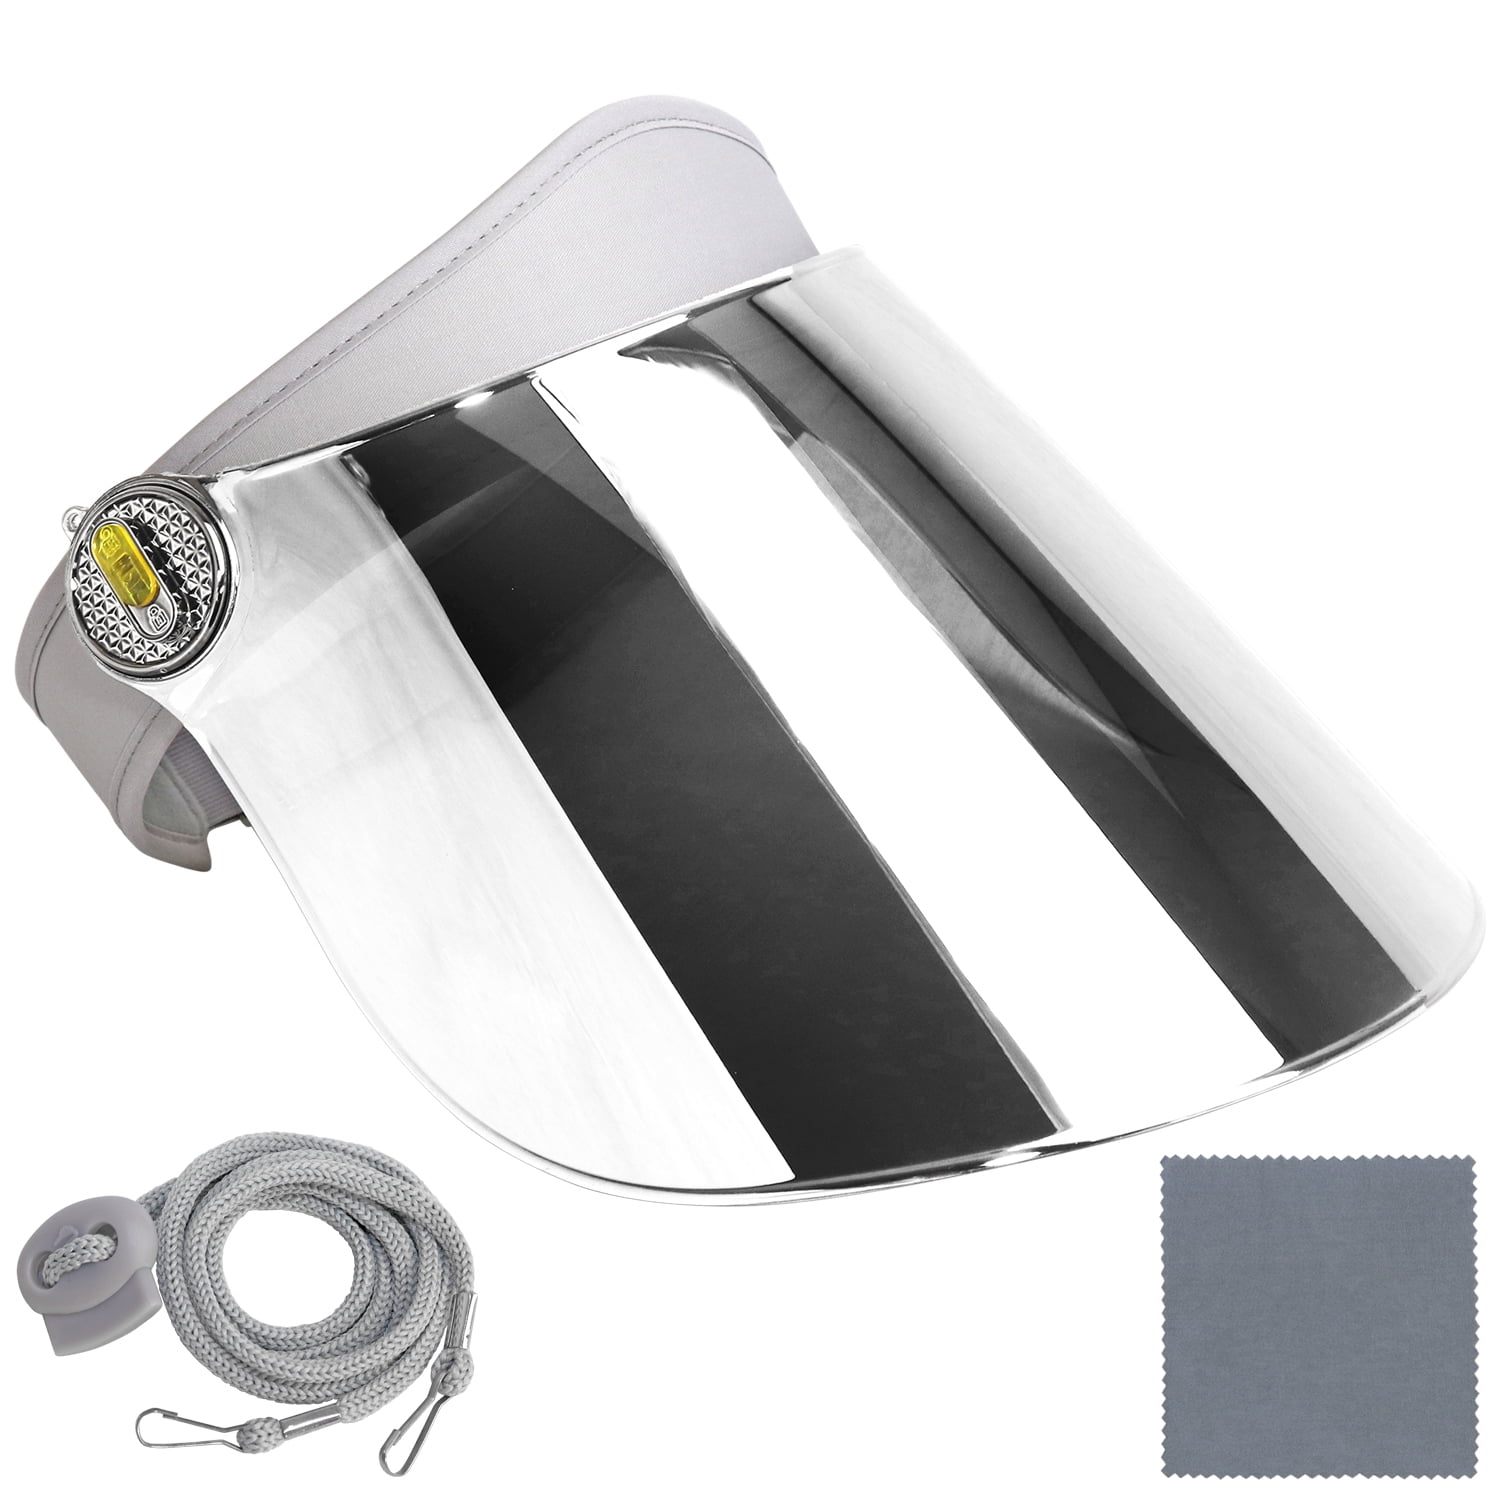 Sun Visor Hat Cap UV Protection - Premium Adjustable Solar Headband Face  Shield Mirrored (Black Headband) 